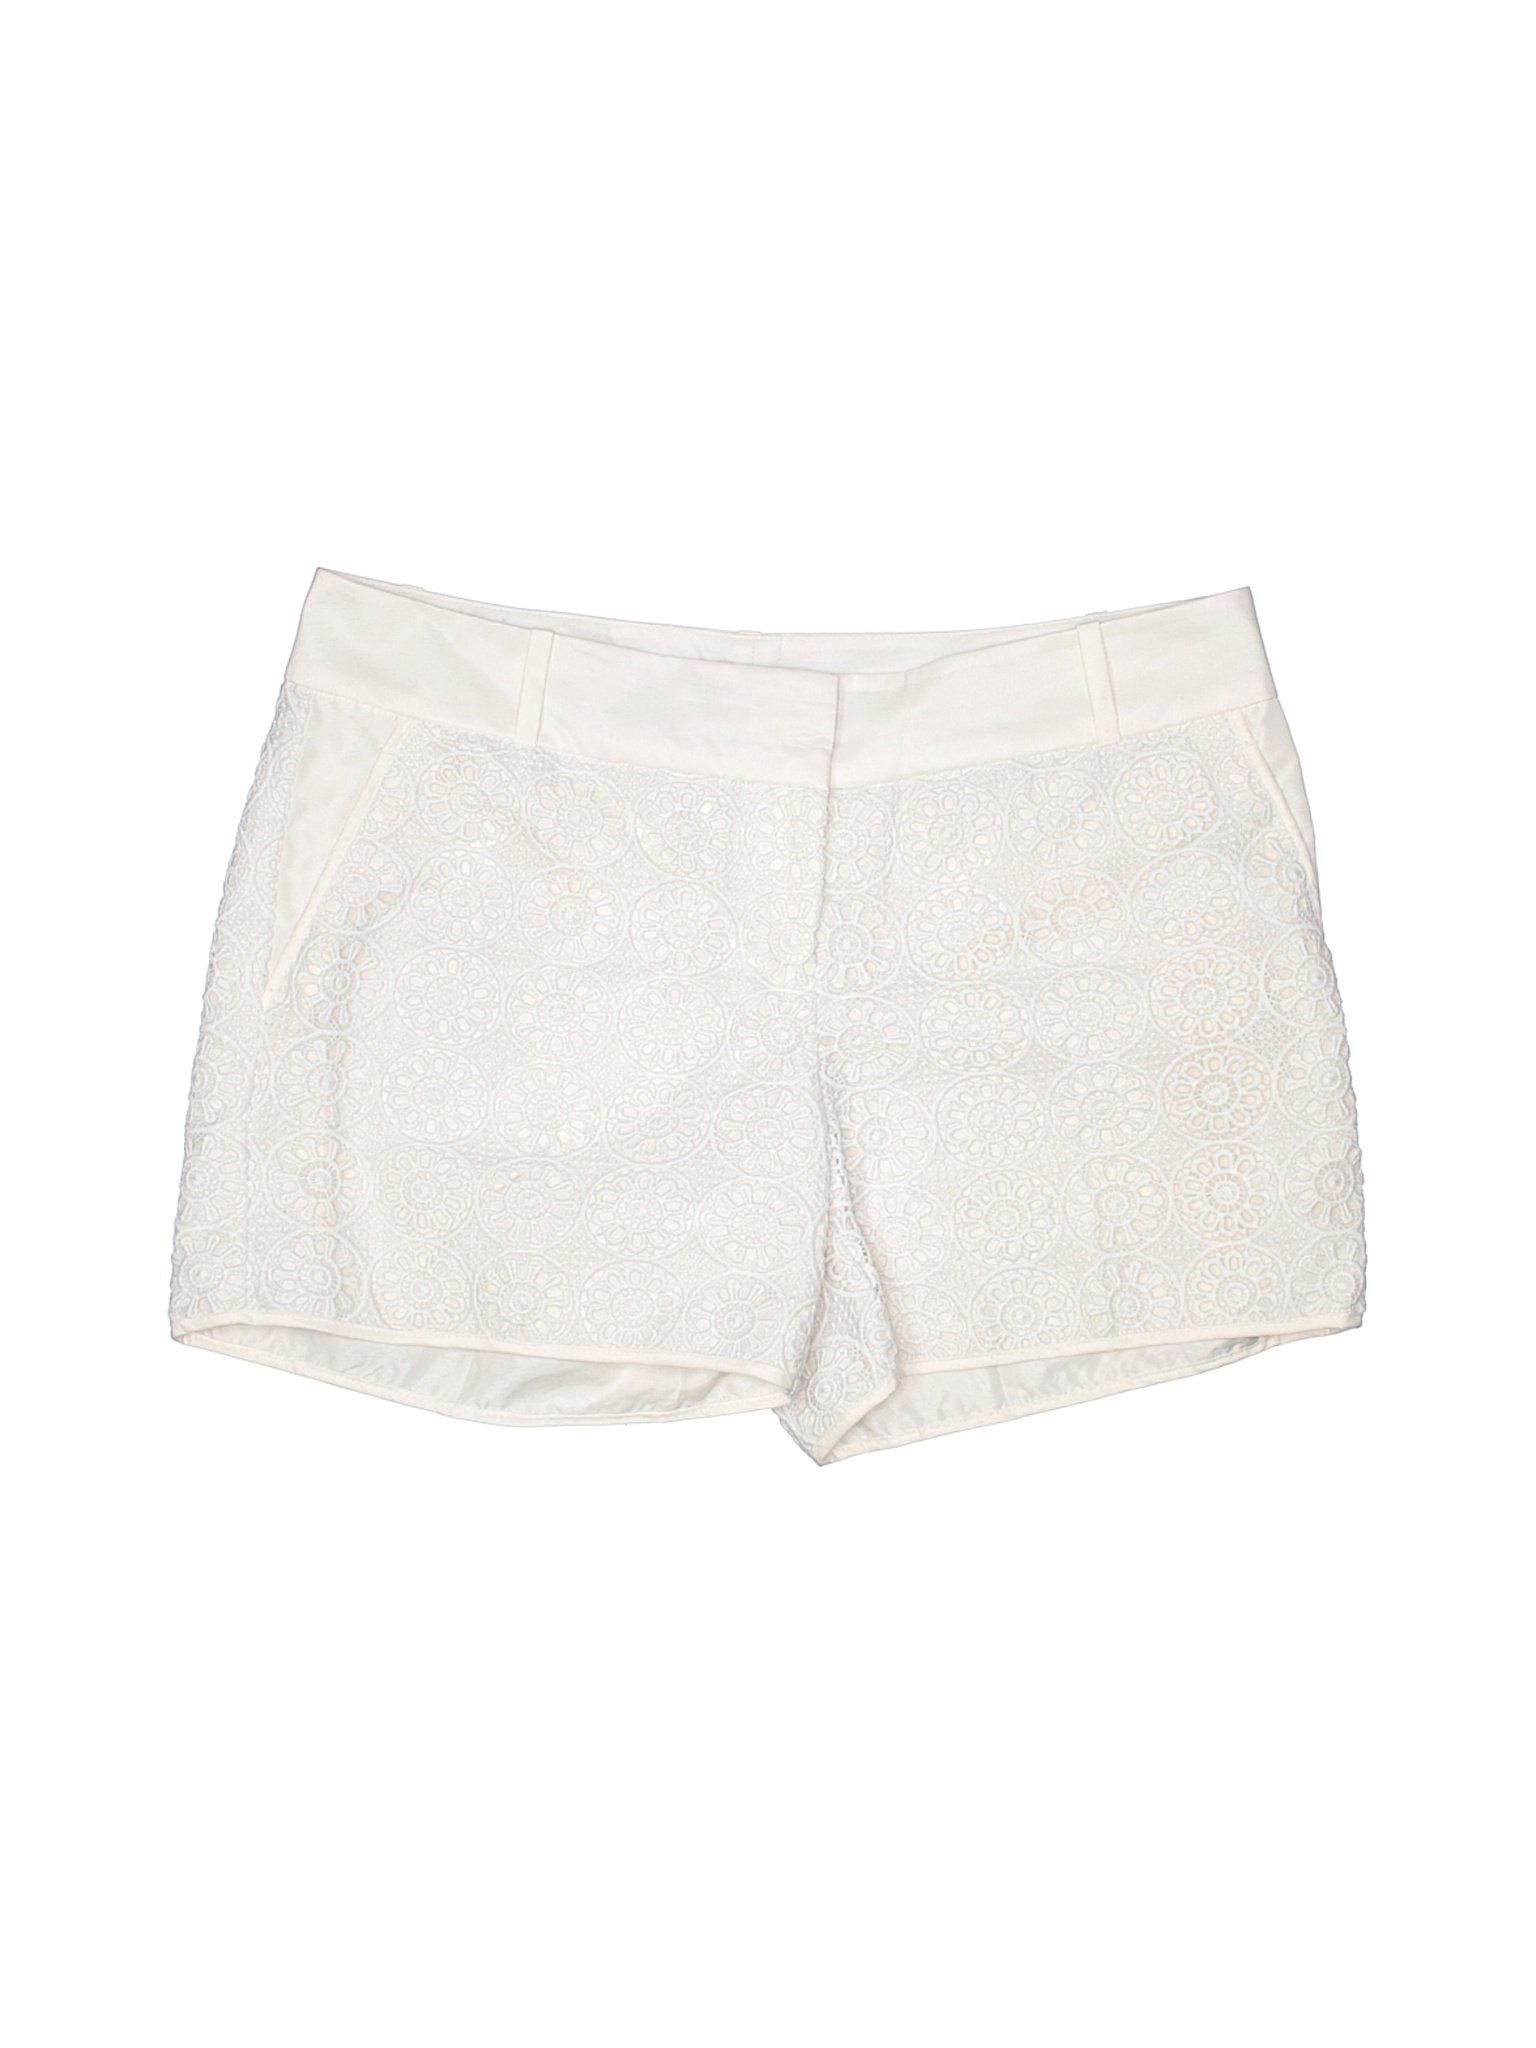 The Limited Women White Shorts 12 | eBay